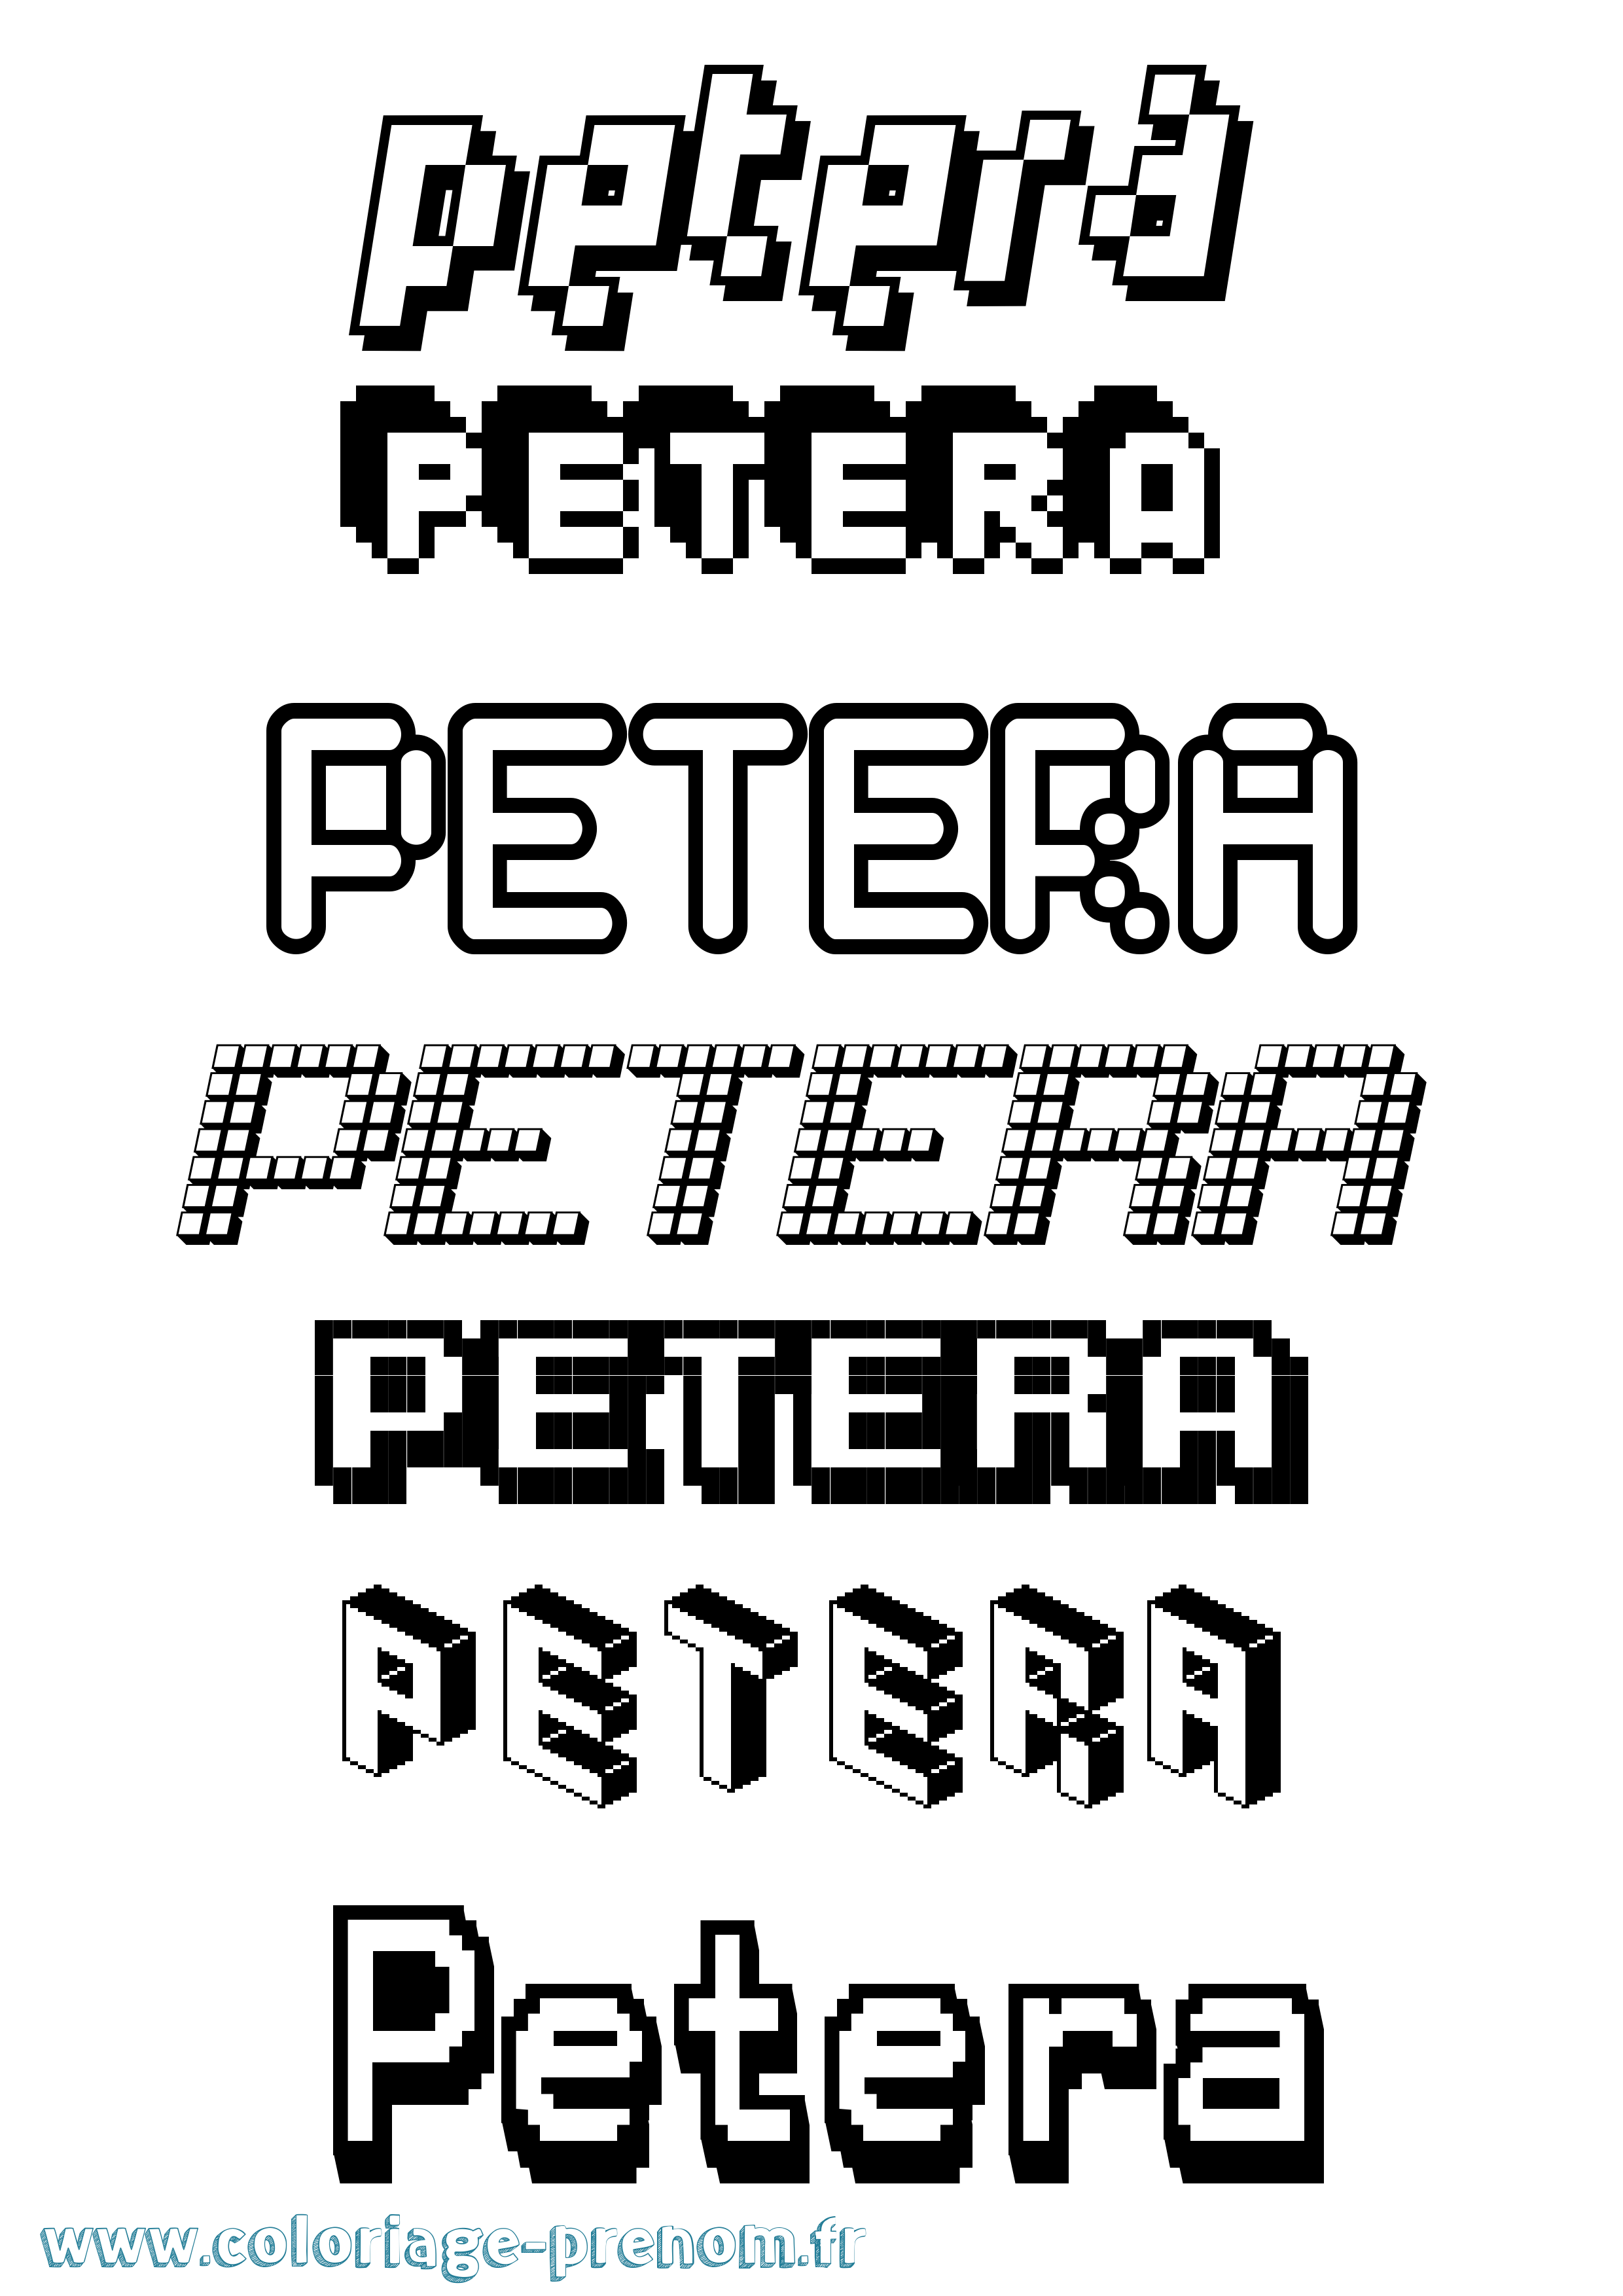 Coloriage prénom Petera Pixel